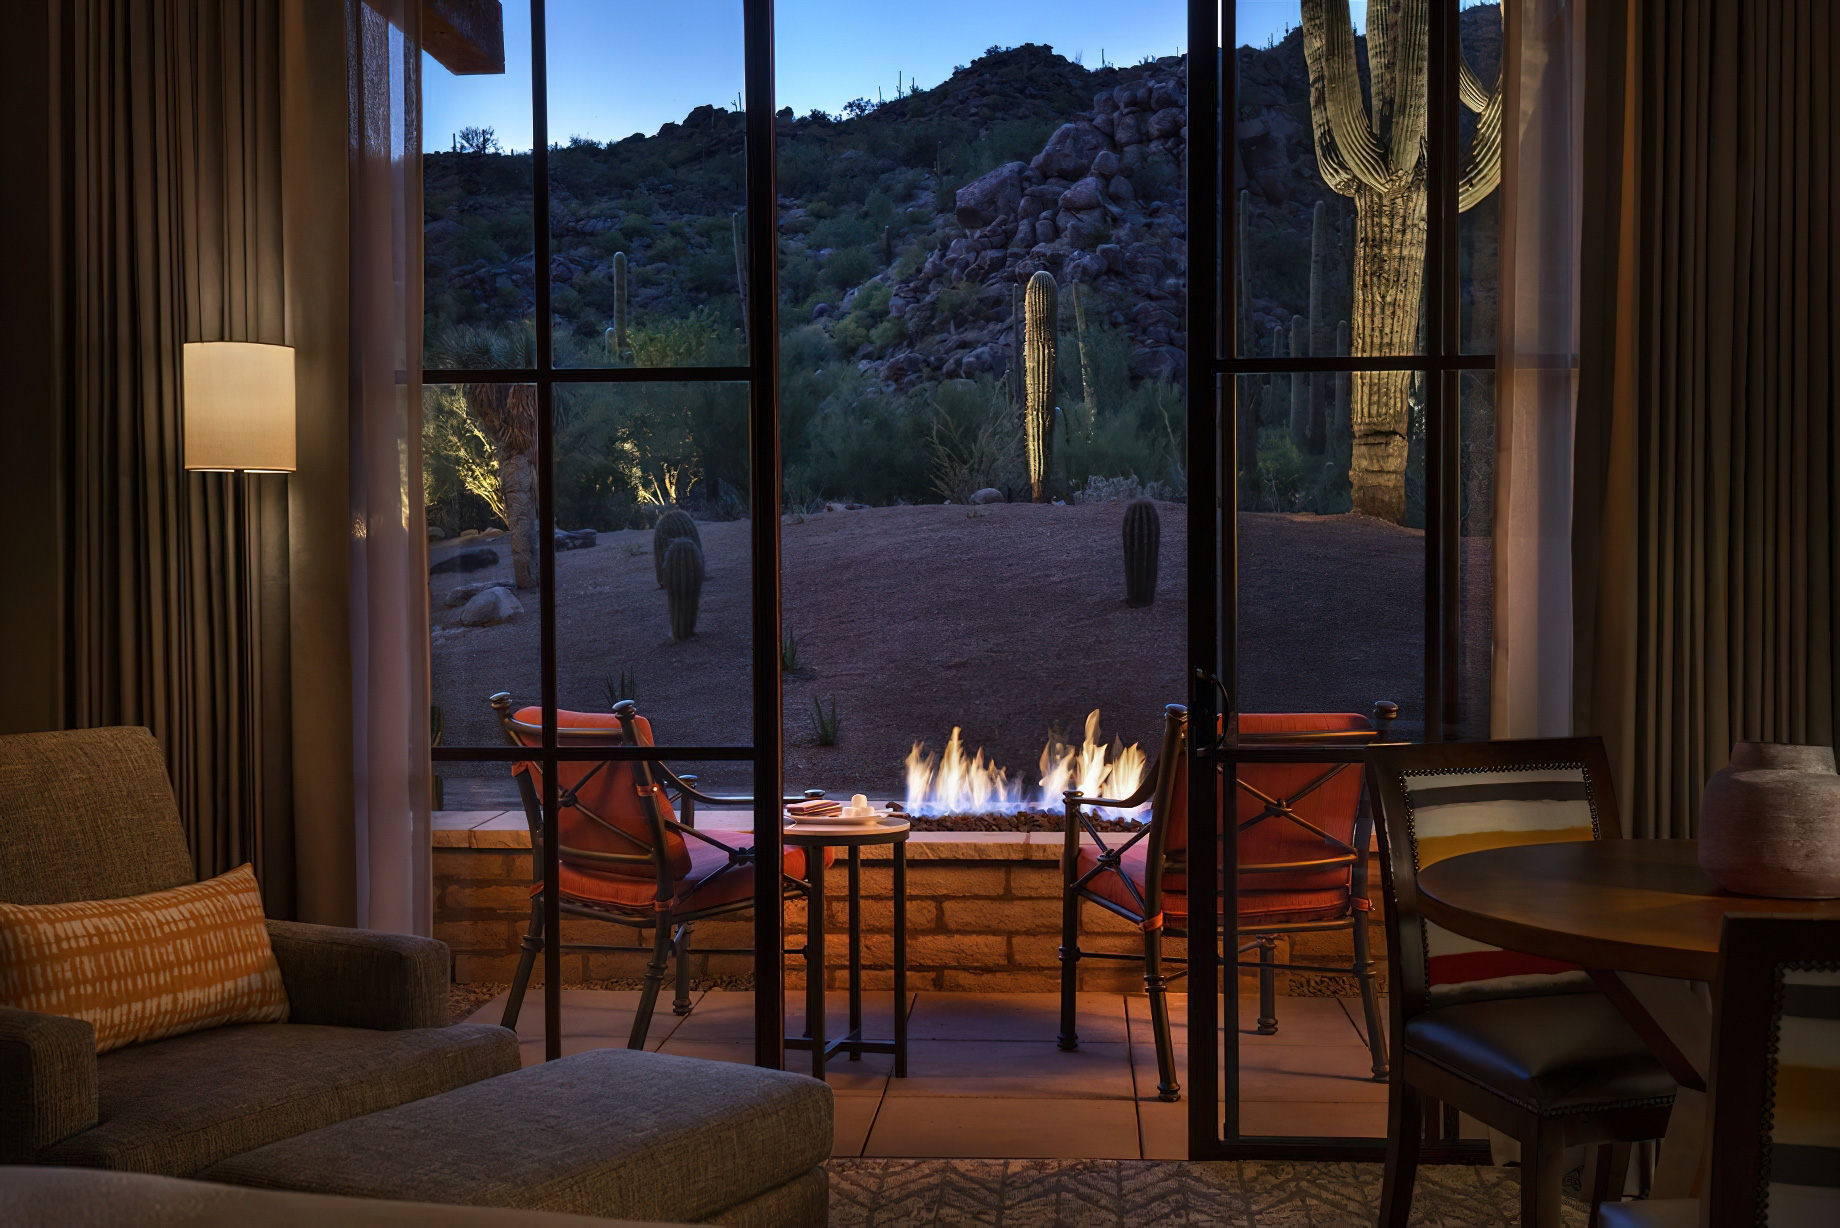 The Ritz-Carlton, Dove Mountain Resort - Marana, AZ, USA - Fireside Mountain View Room Deck